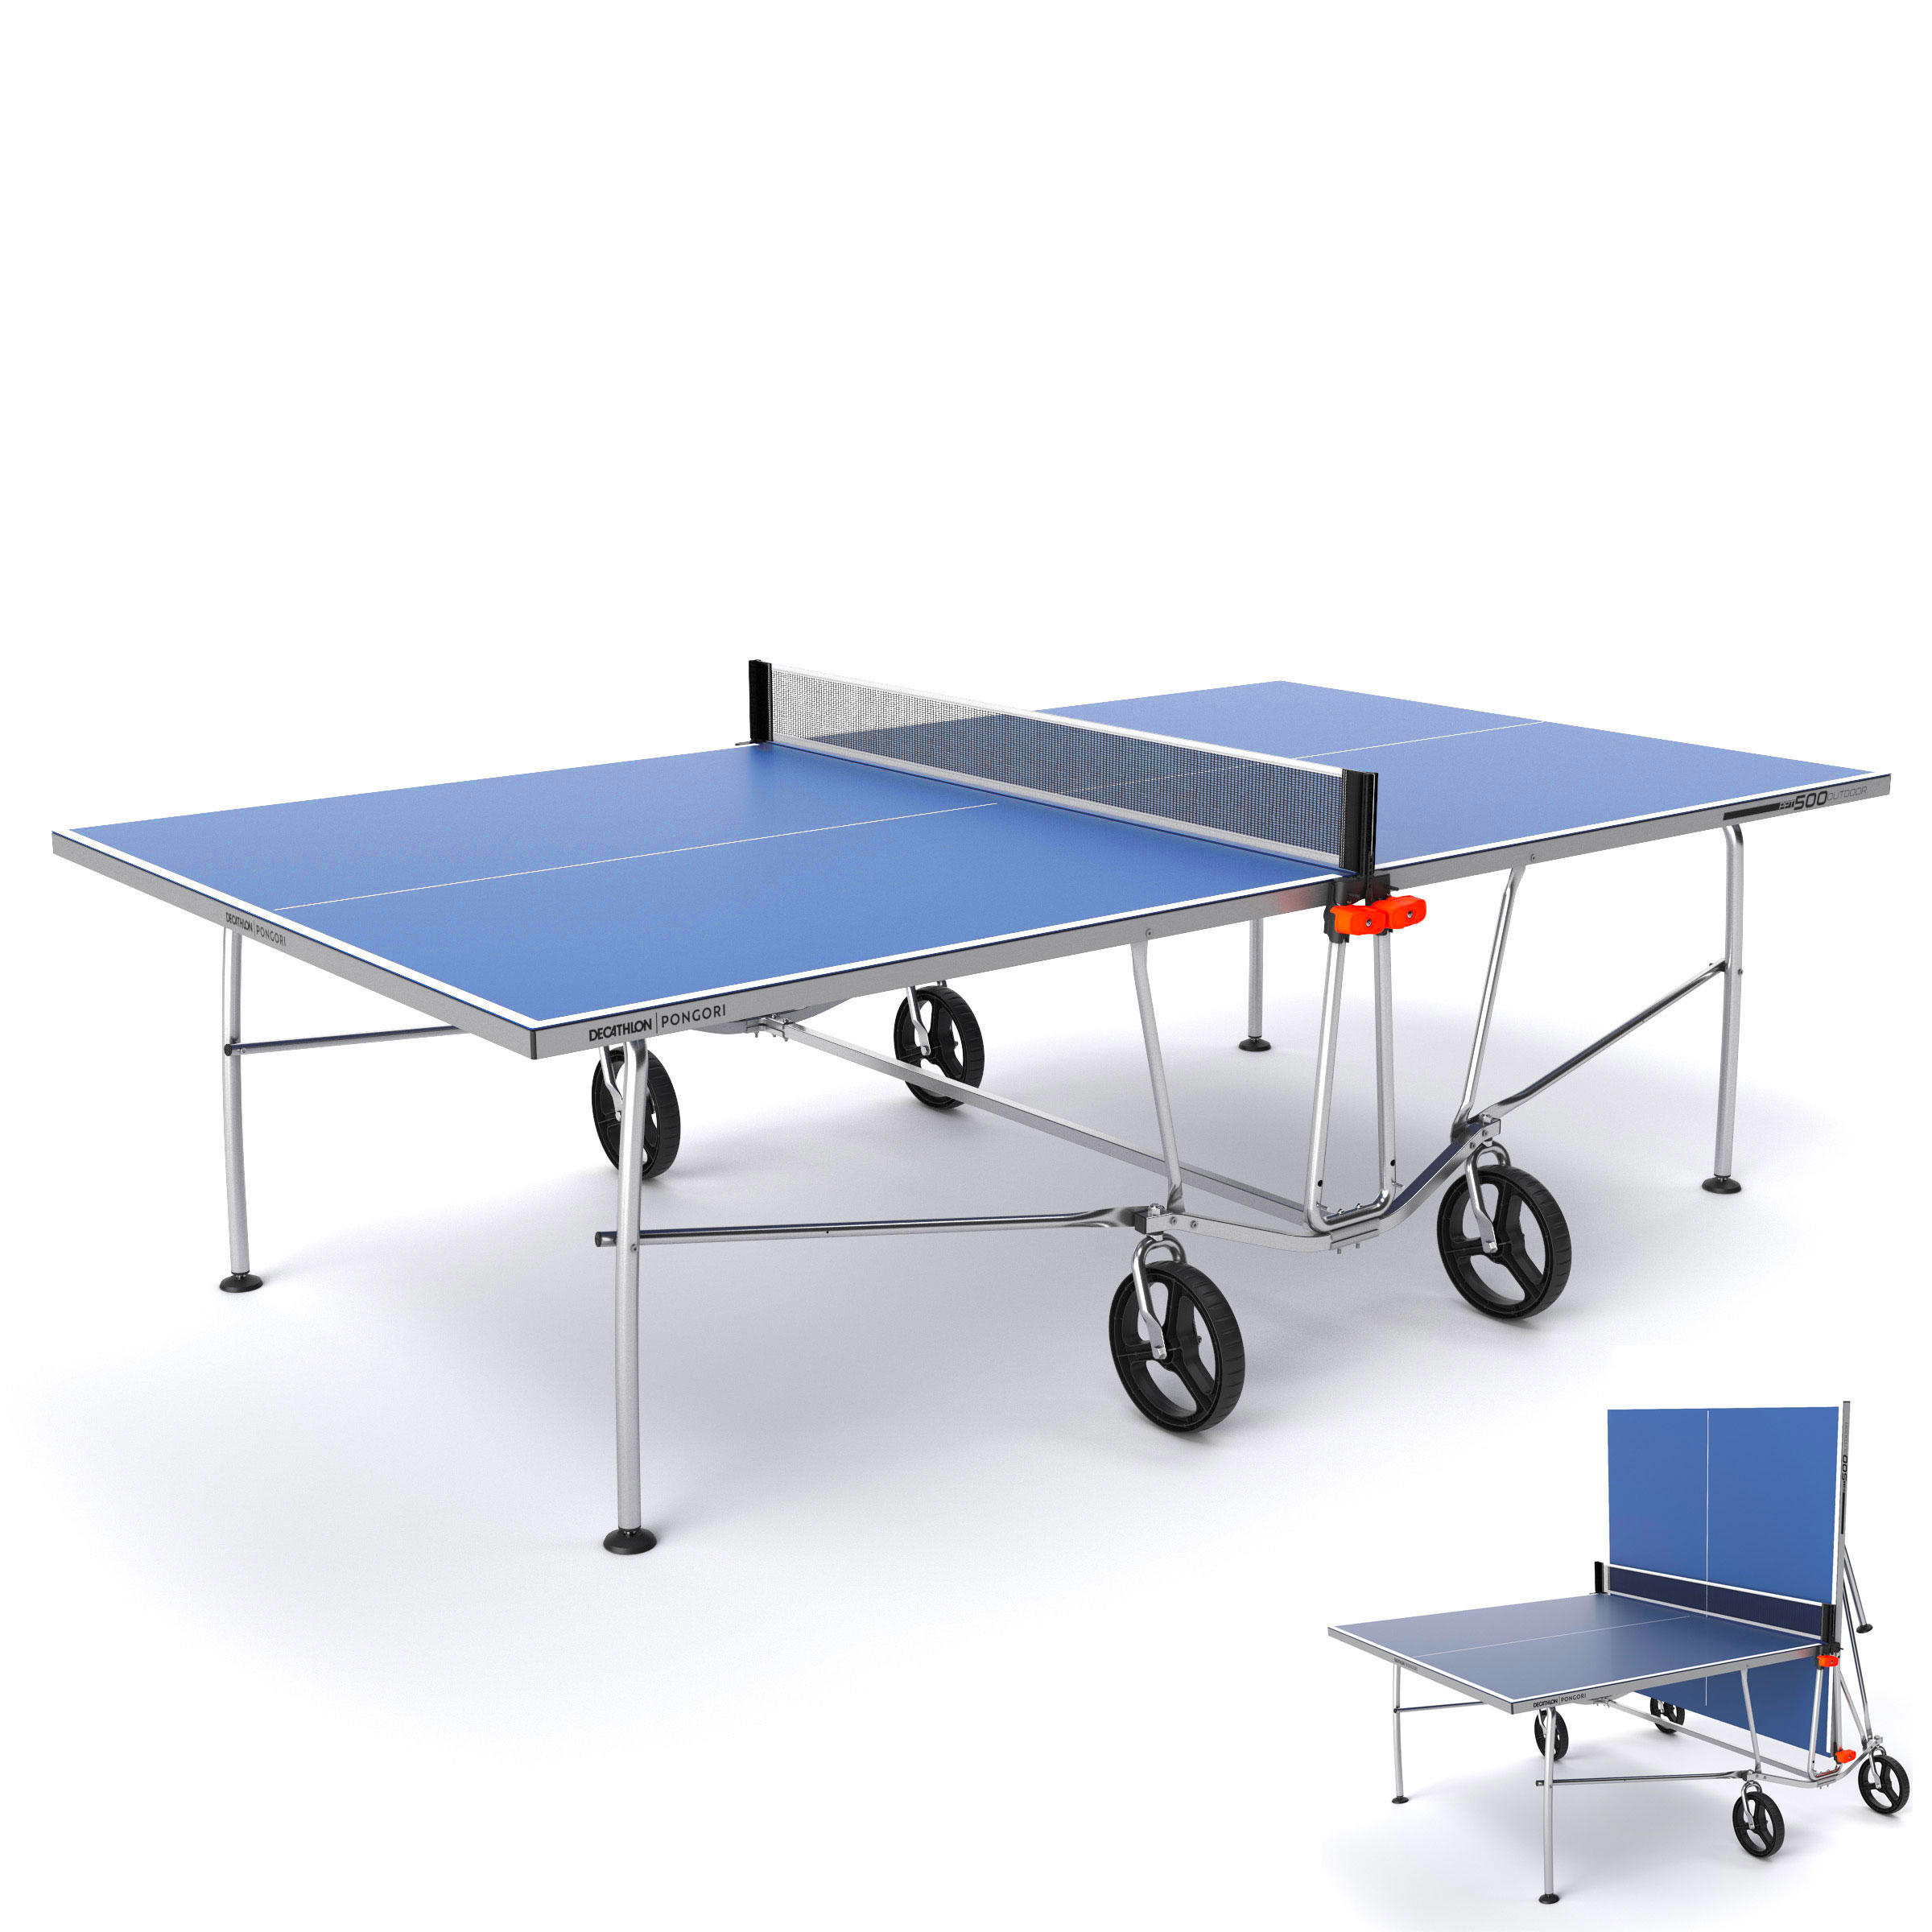 PPT 500 Free Table Tennis Table - Decathlon